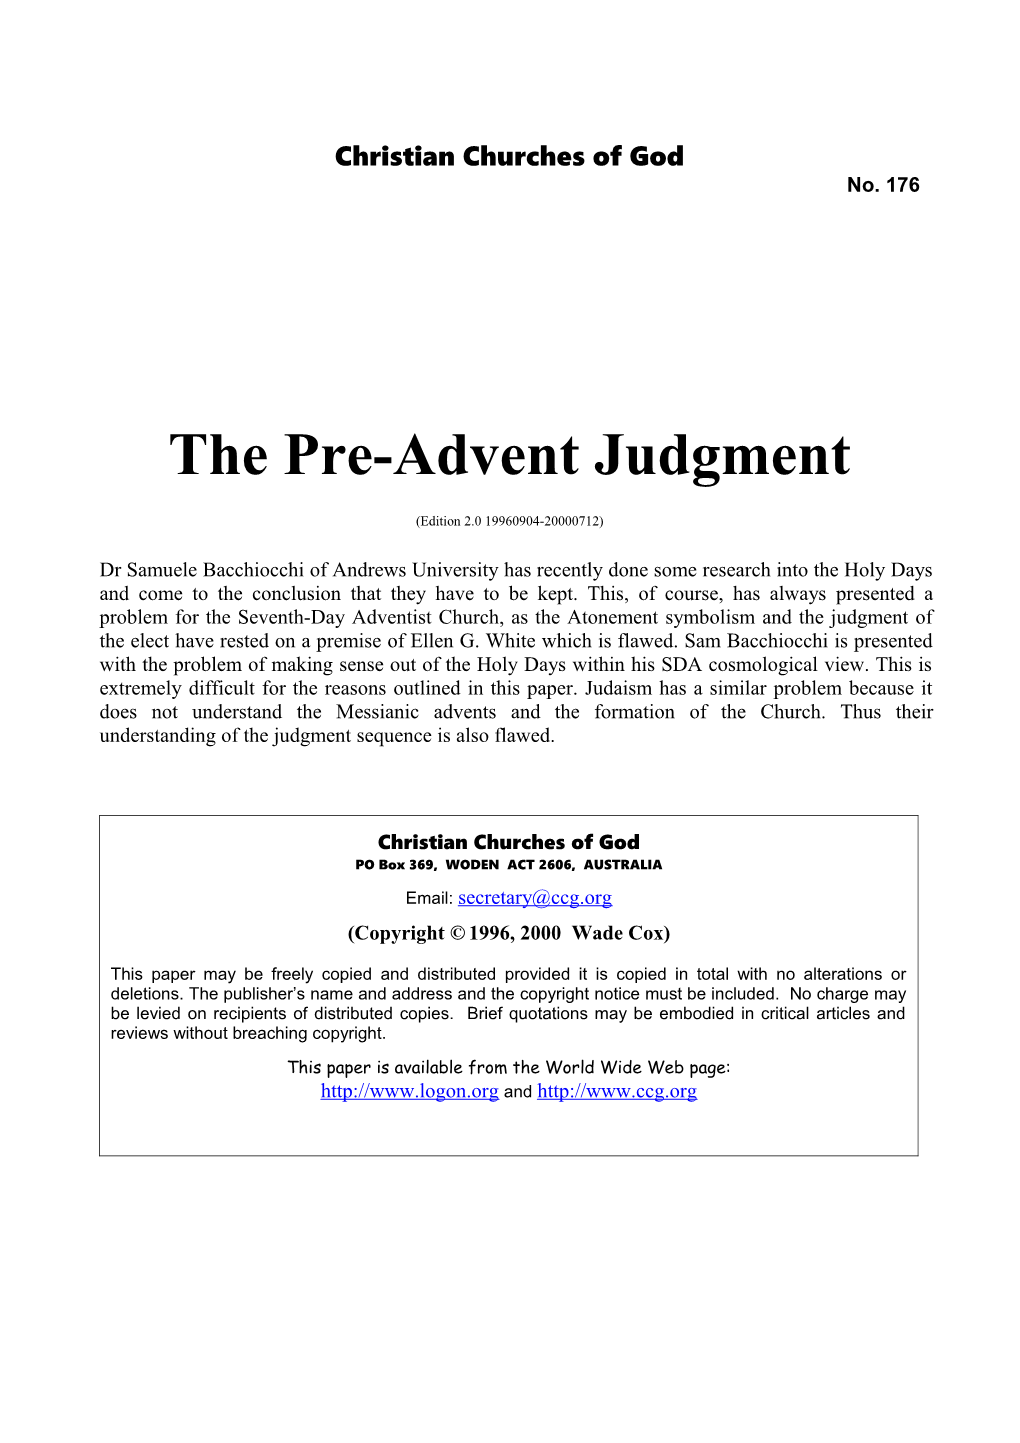 The Pre-Advent Judgment (No. 176)